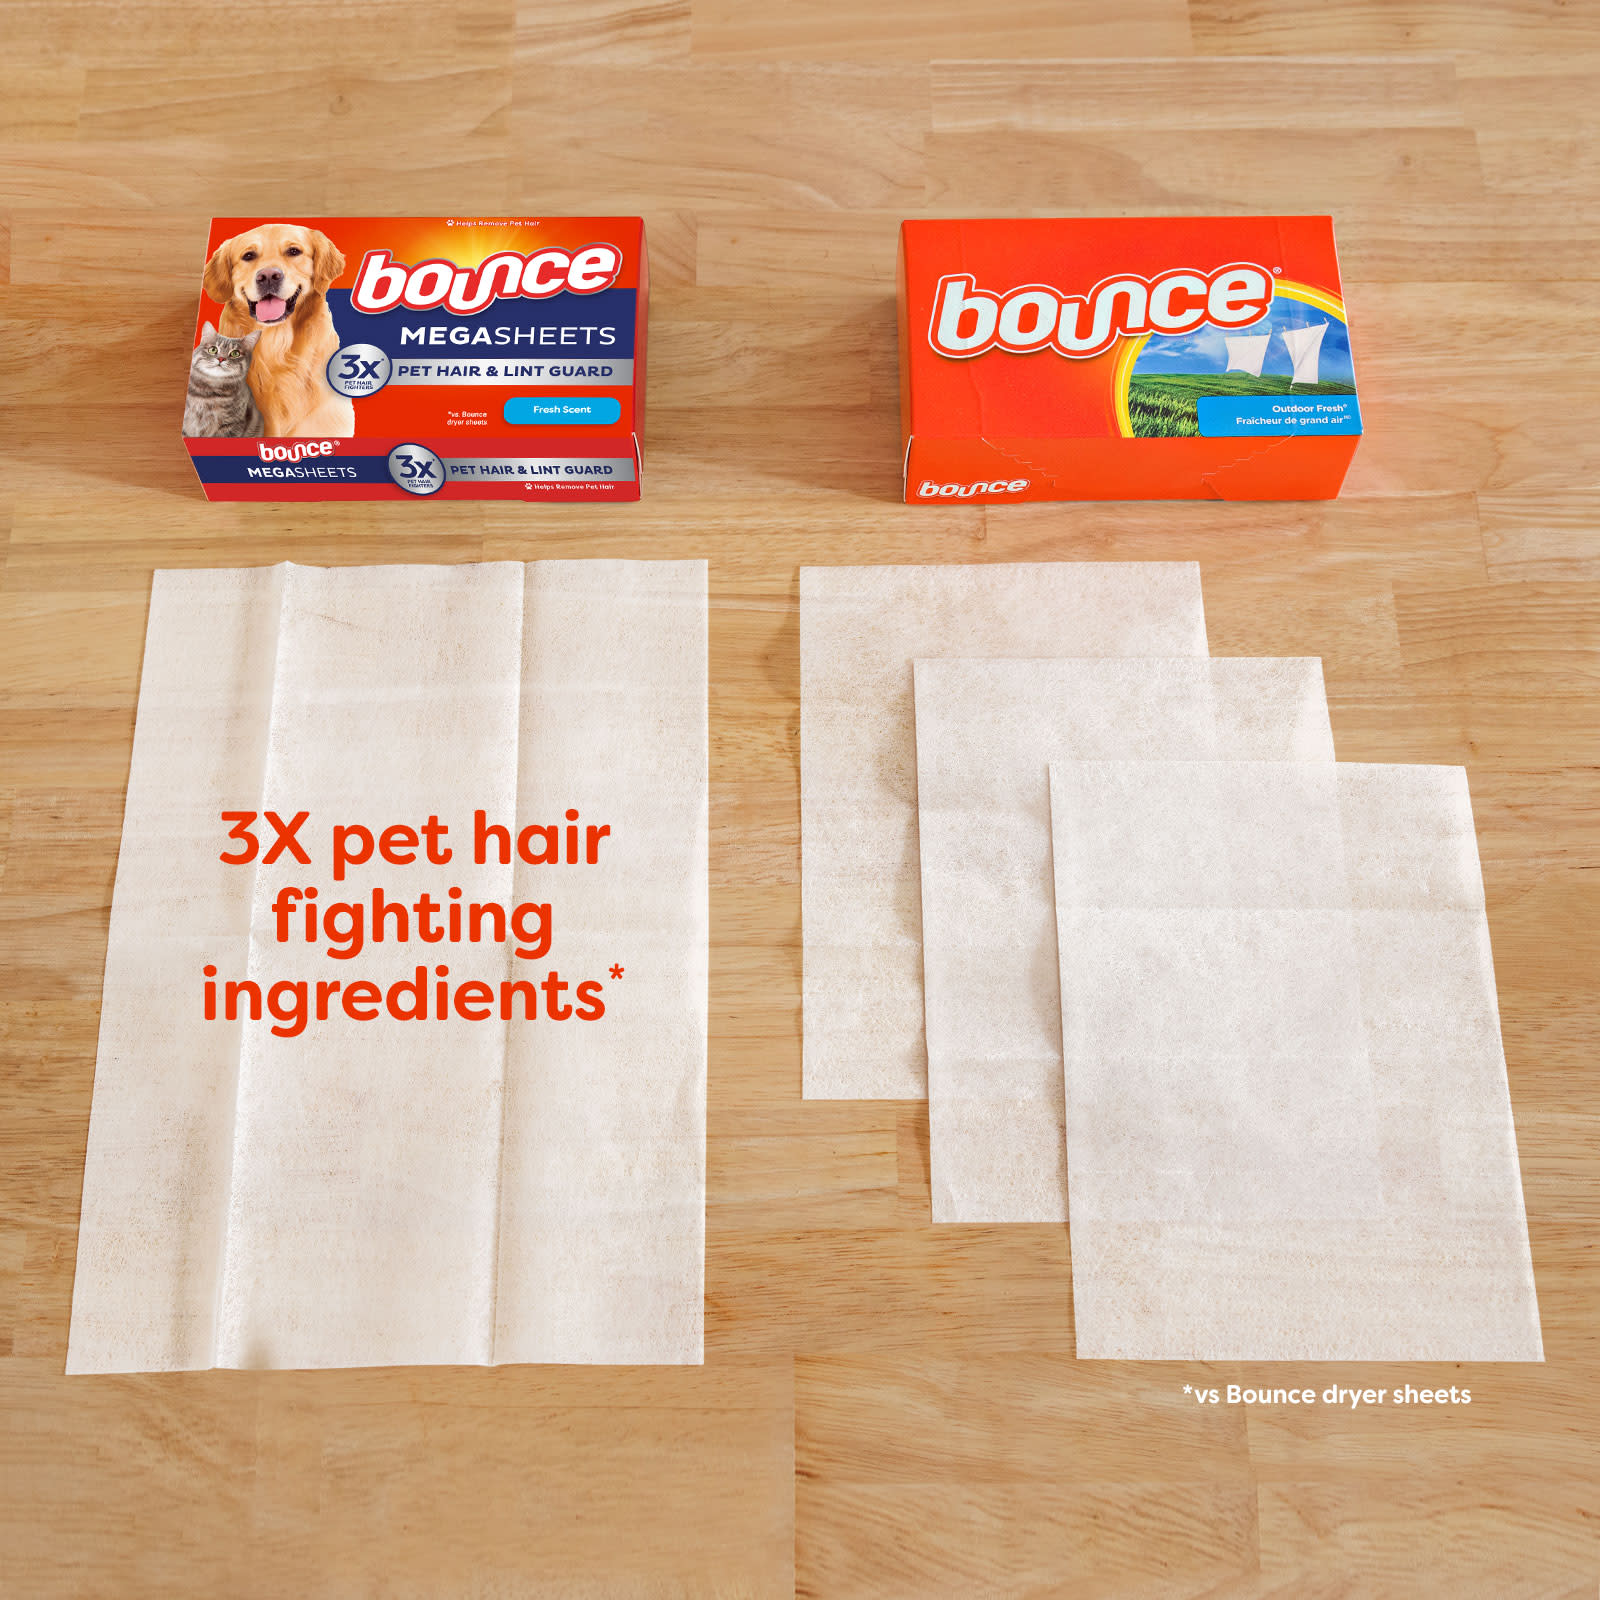 Bounce Pet Hair Dryer Sheets: 3X pet hair fighting ingredients